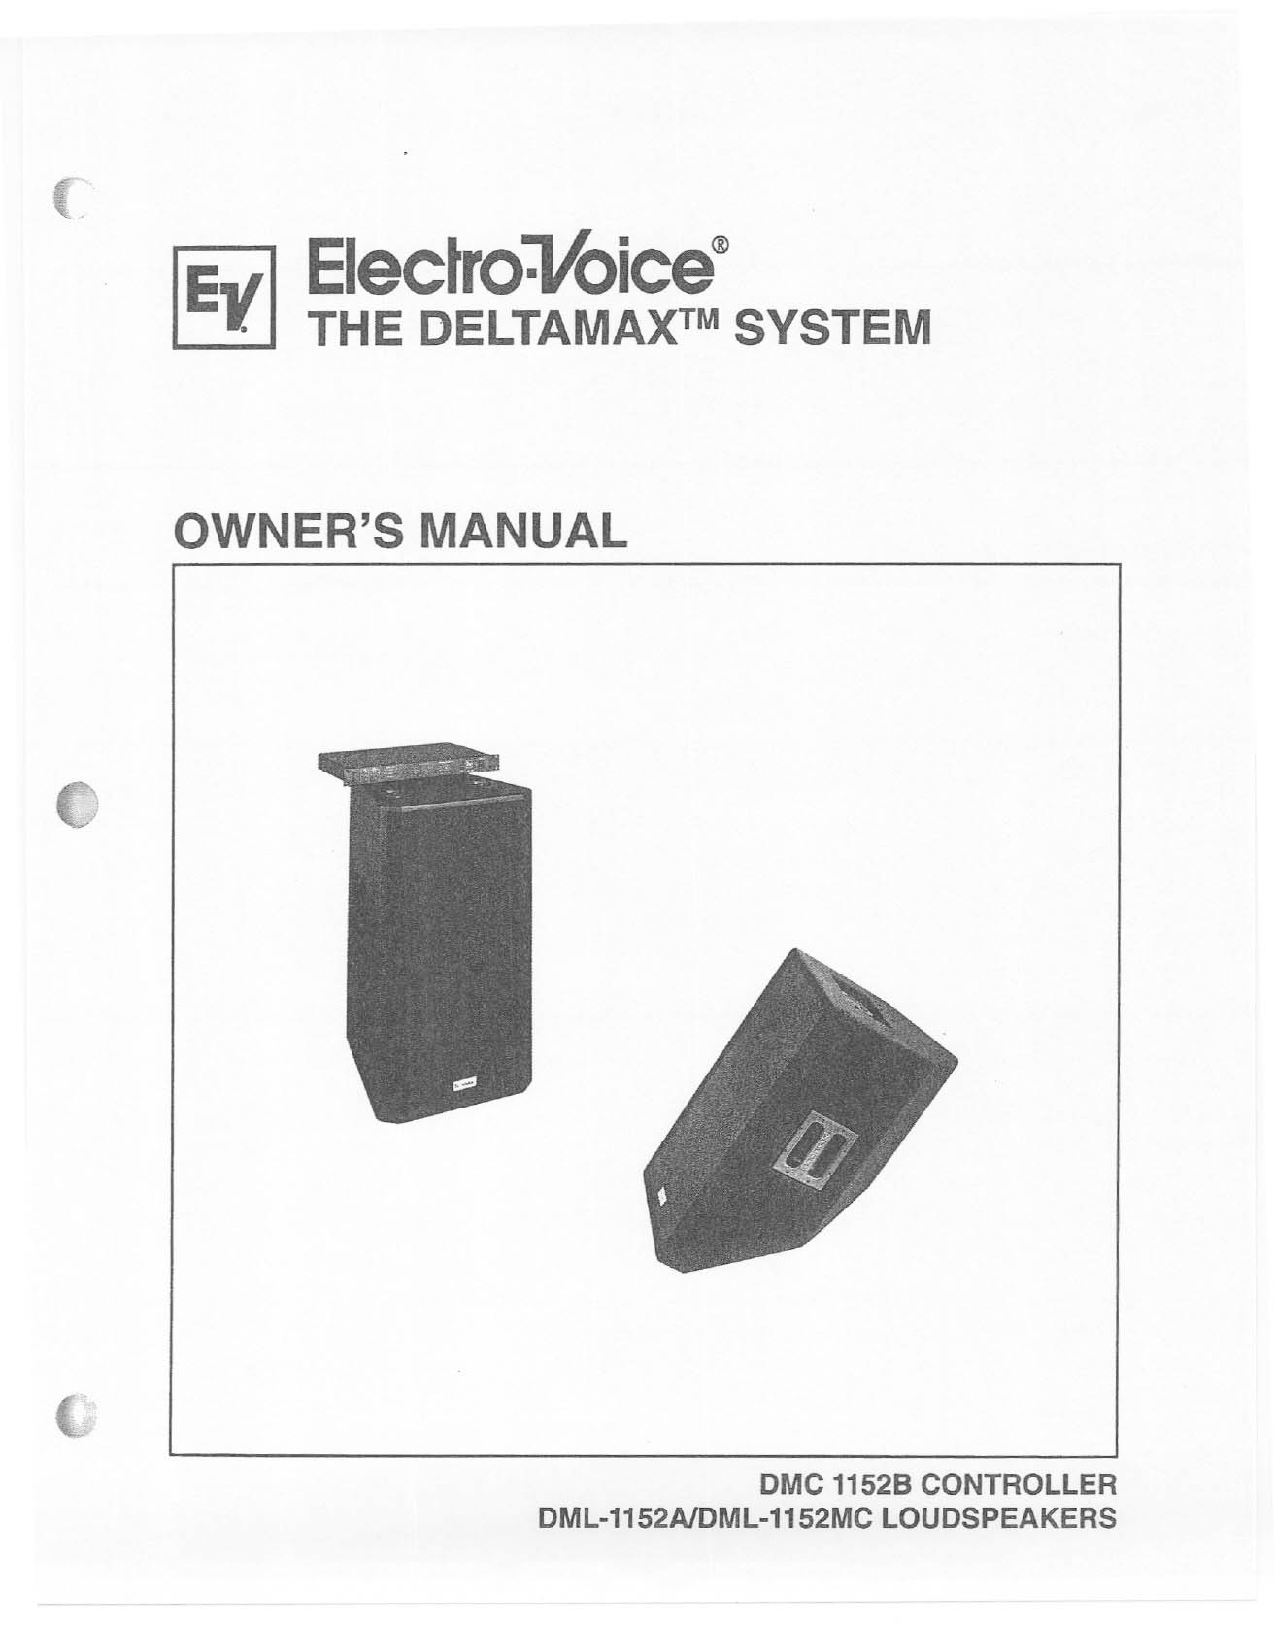 Electro-Voice DML-1152MC, DML-1152A User Manual